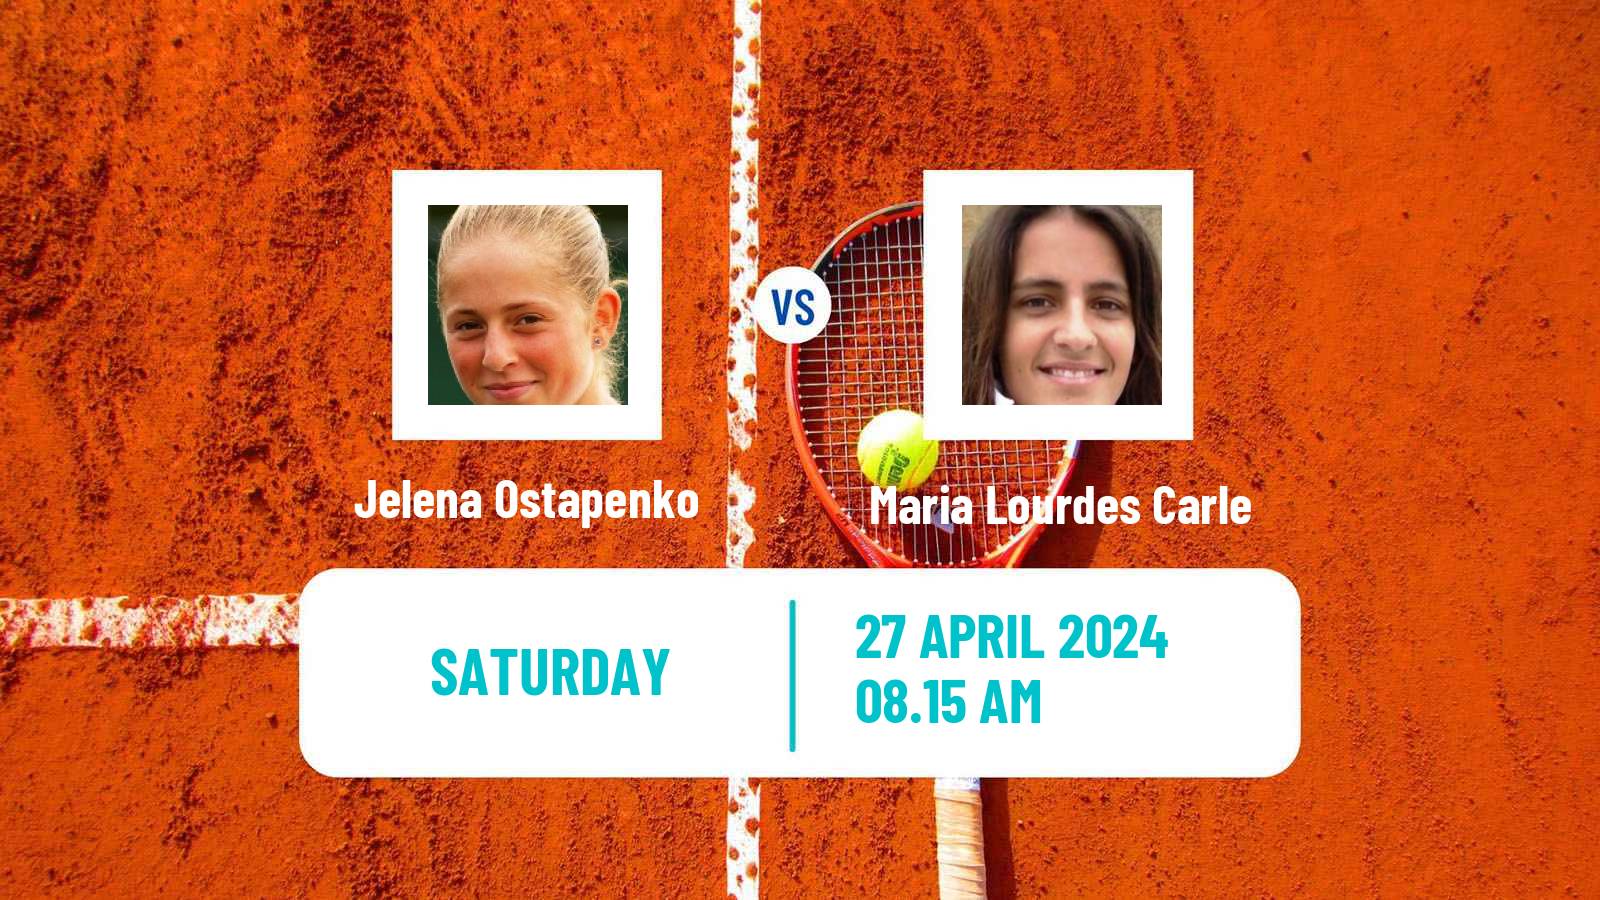 Tennis WTA Madrid Jelena Ostapenko - Maria Lourdes Carle